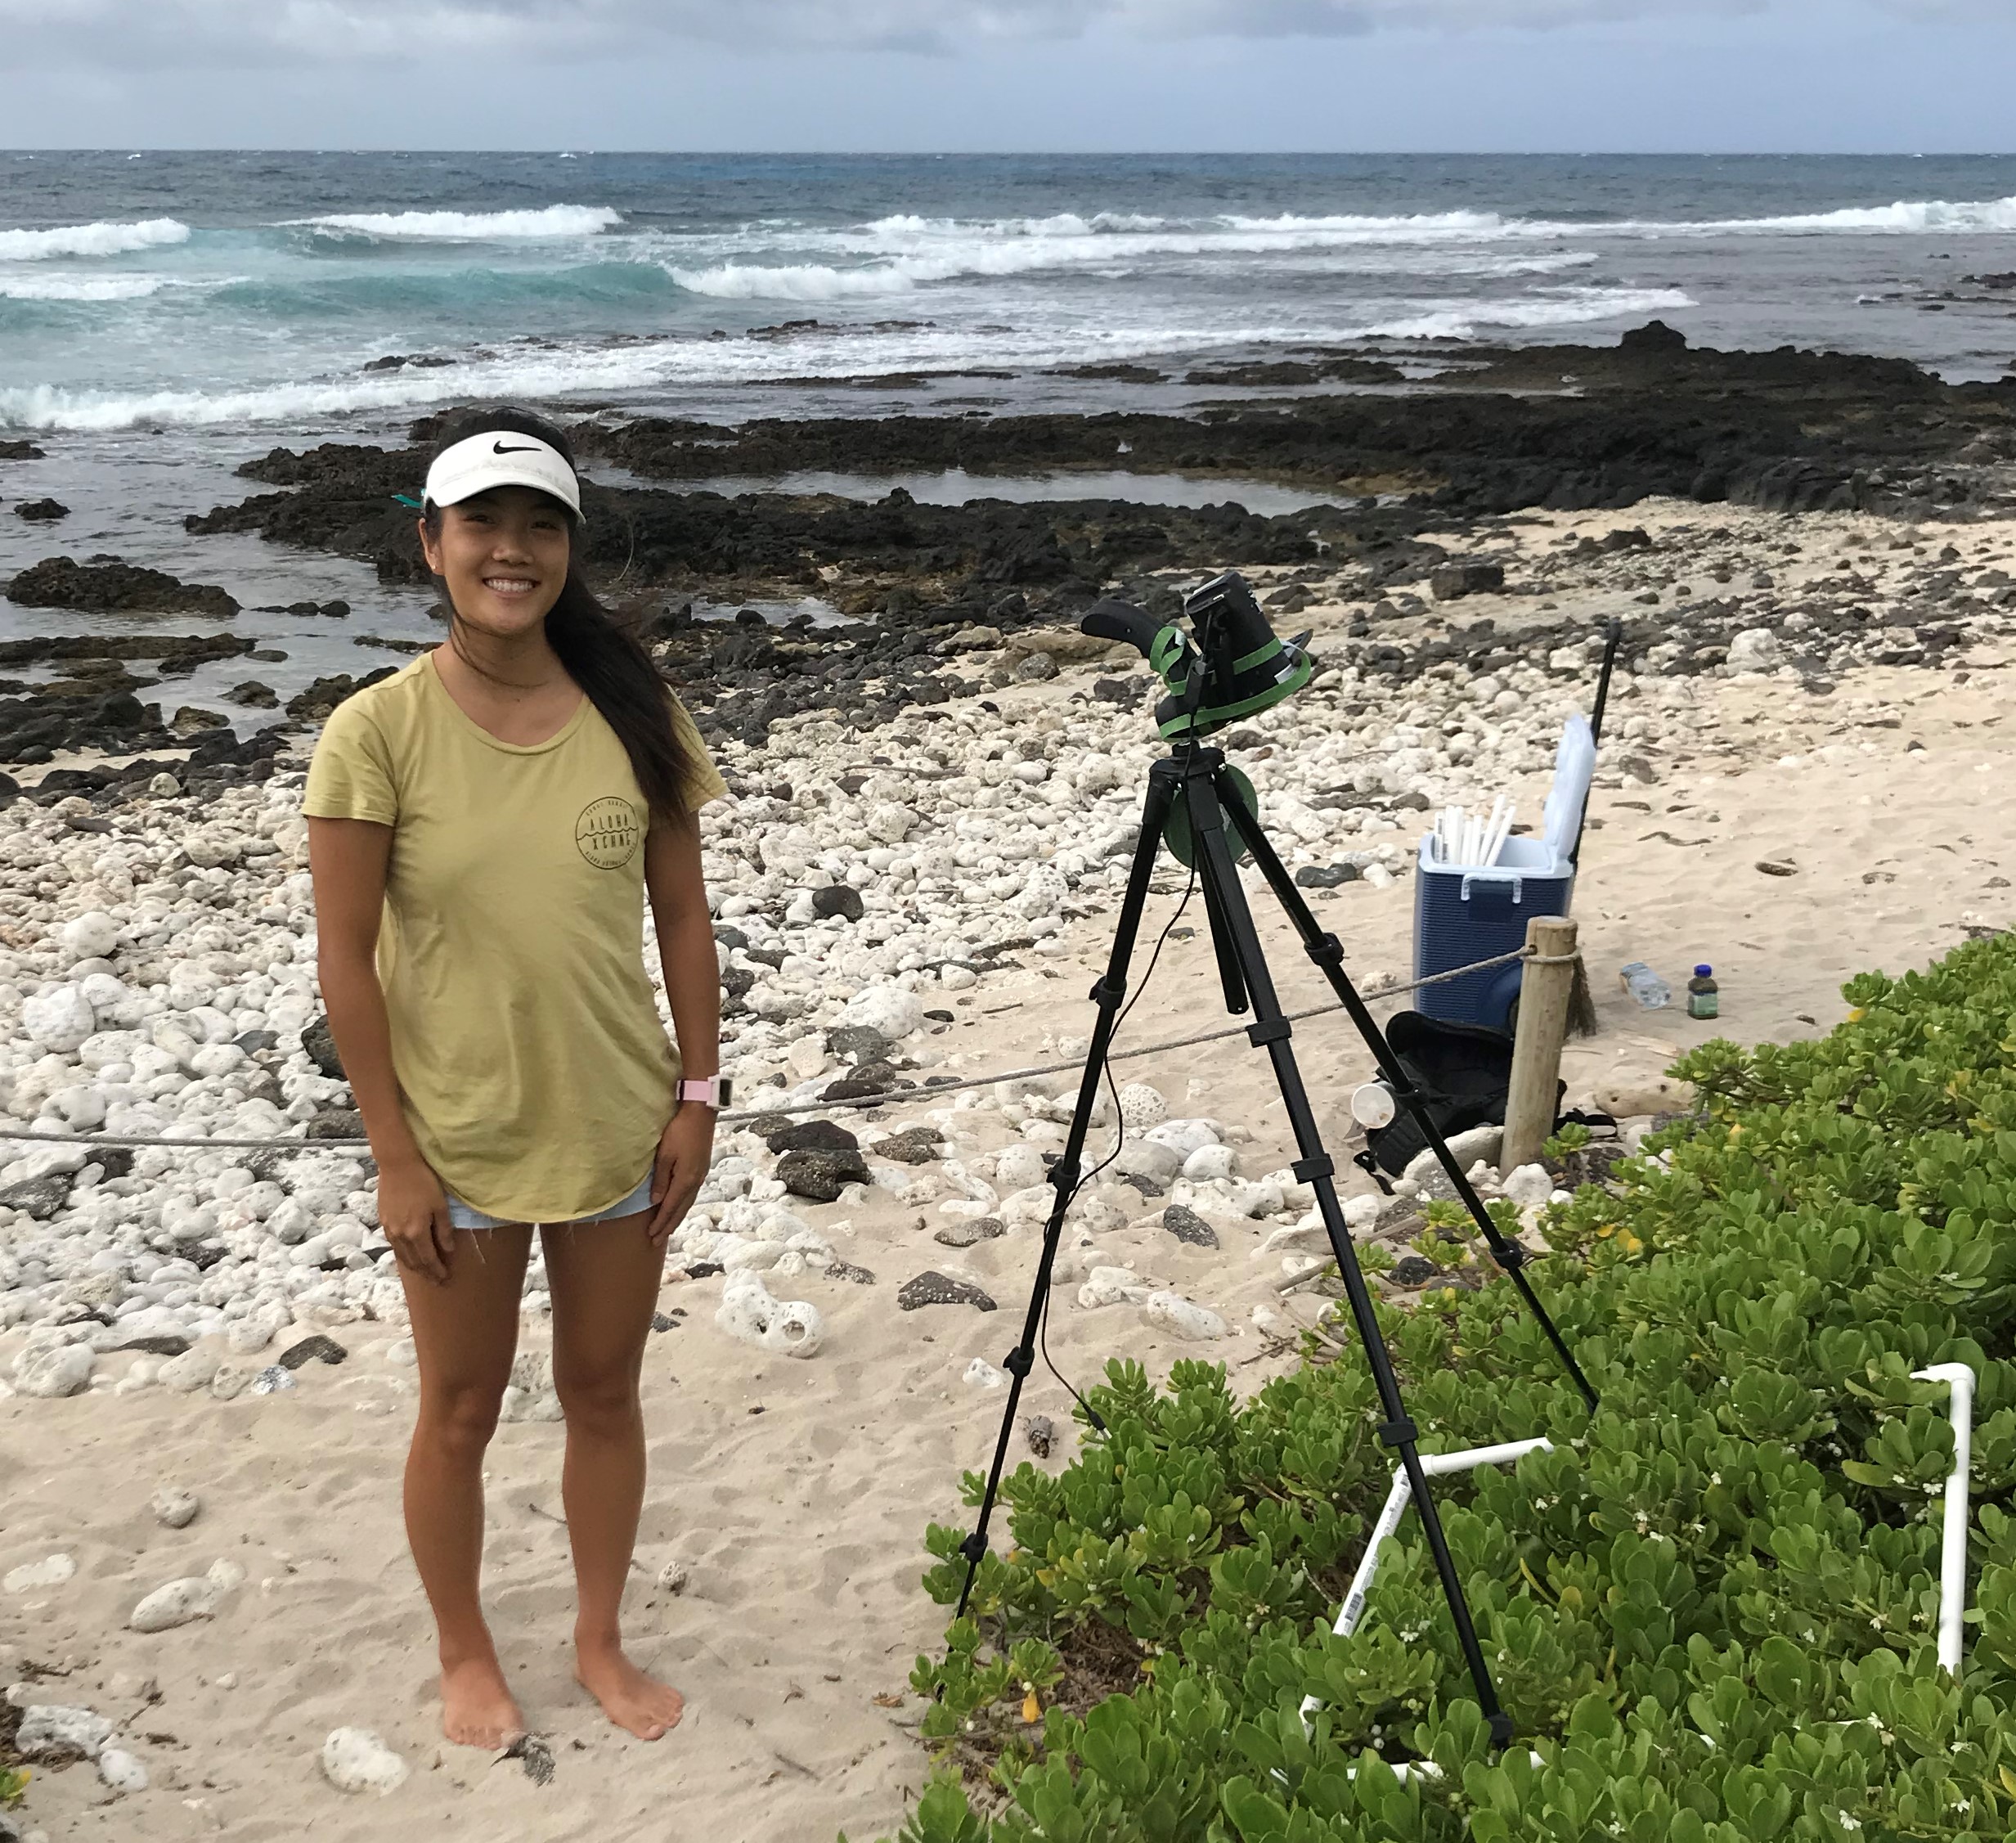 Keilyn at Ka Iwi shoreline collecting data